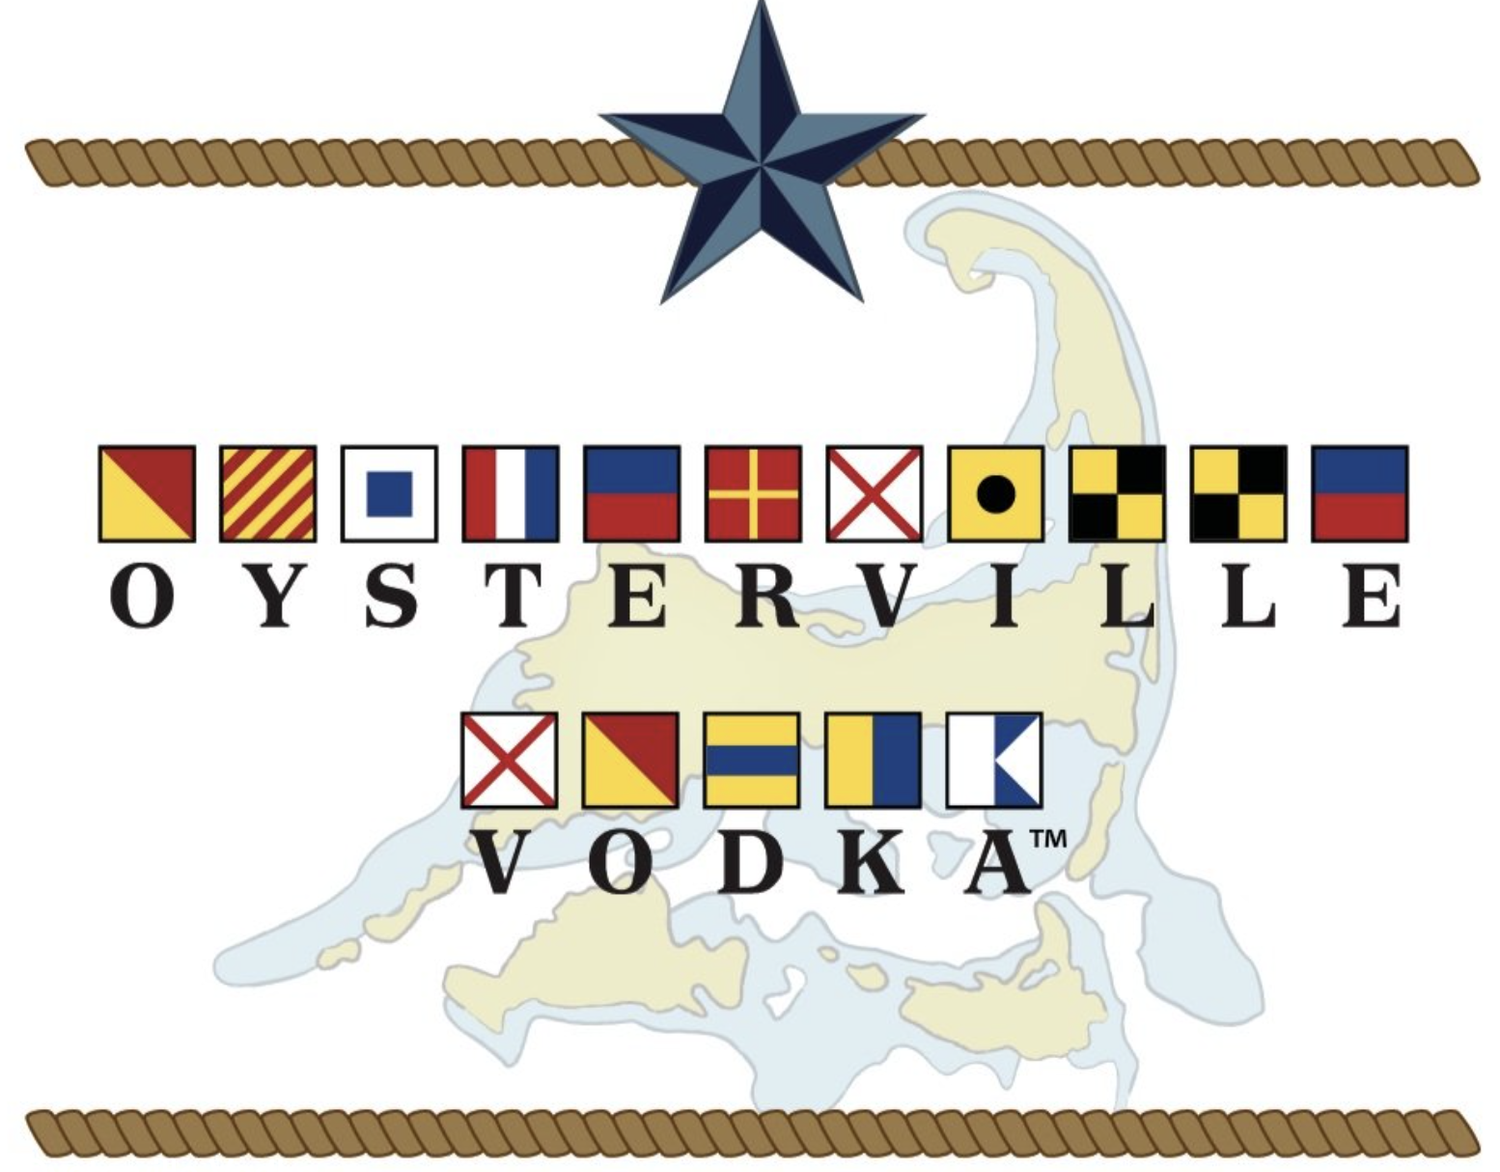 Oysterville Vodka